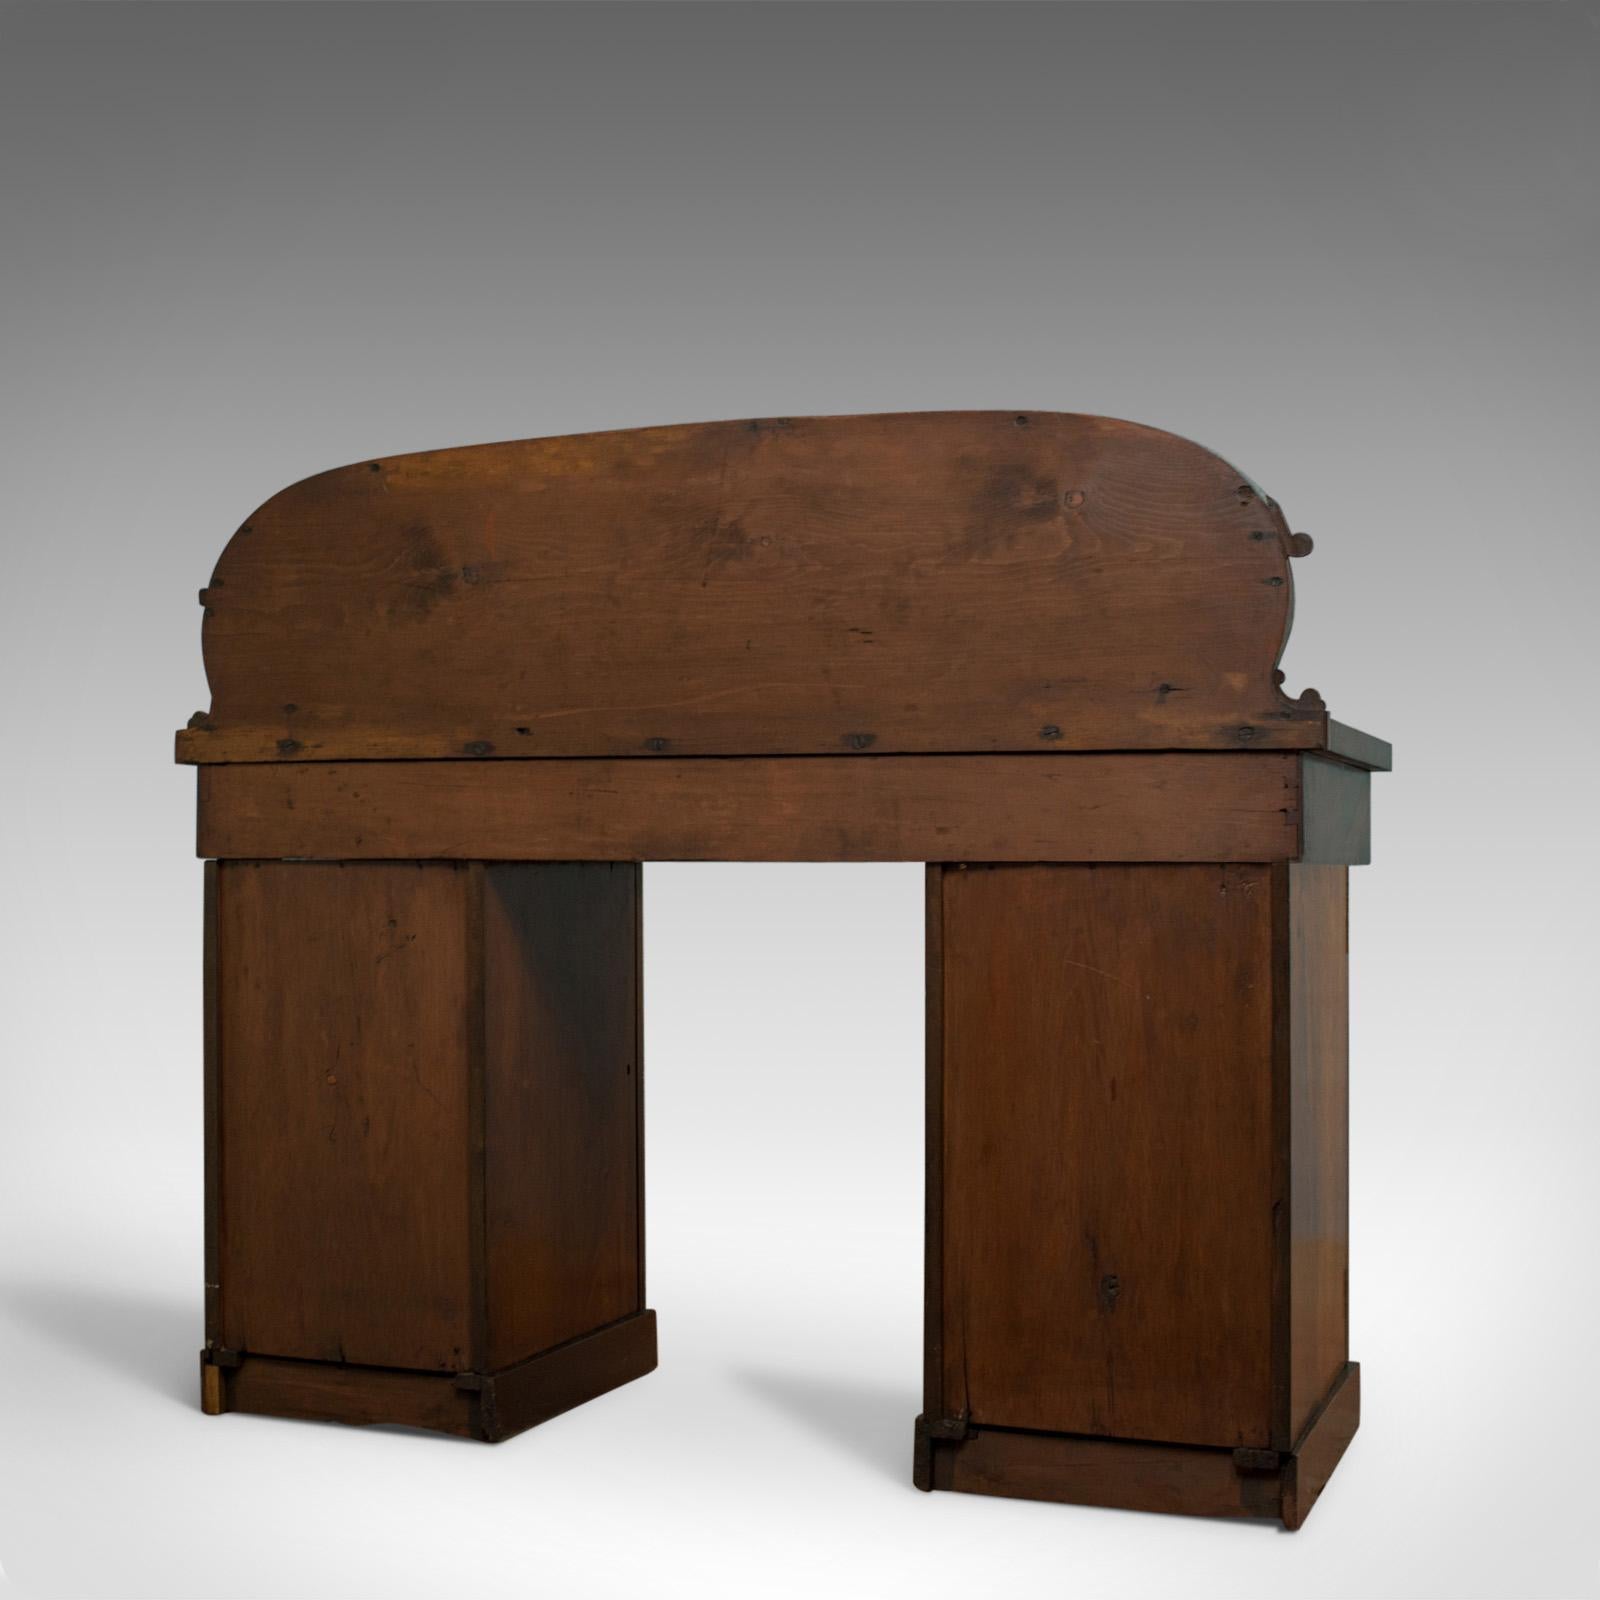 19th Century Antique Pedestal Sideboard, English, Mahogany, Dresser, Victorian, circa 1850